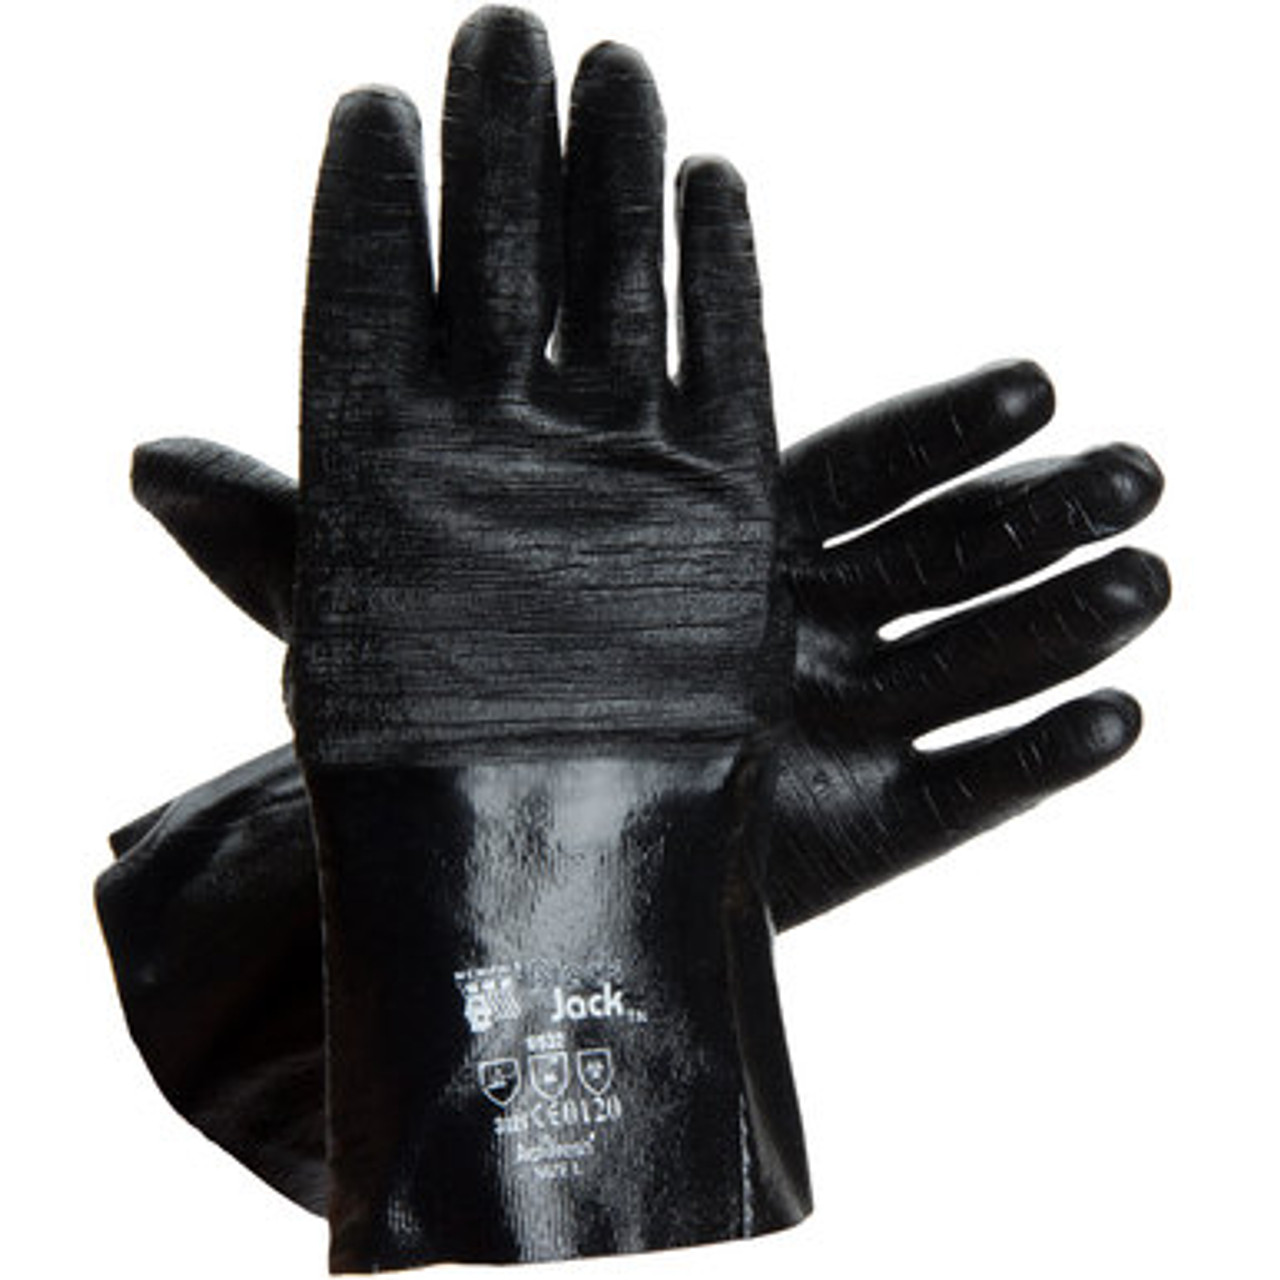 MCR Memphis Black Kevlar Cut Protection Gloves 9178NF (12 pairs)